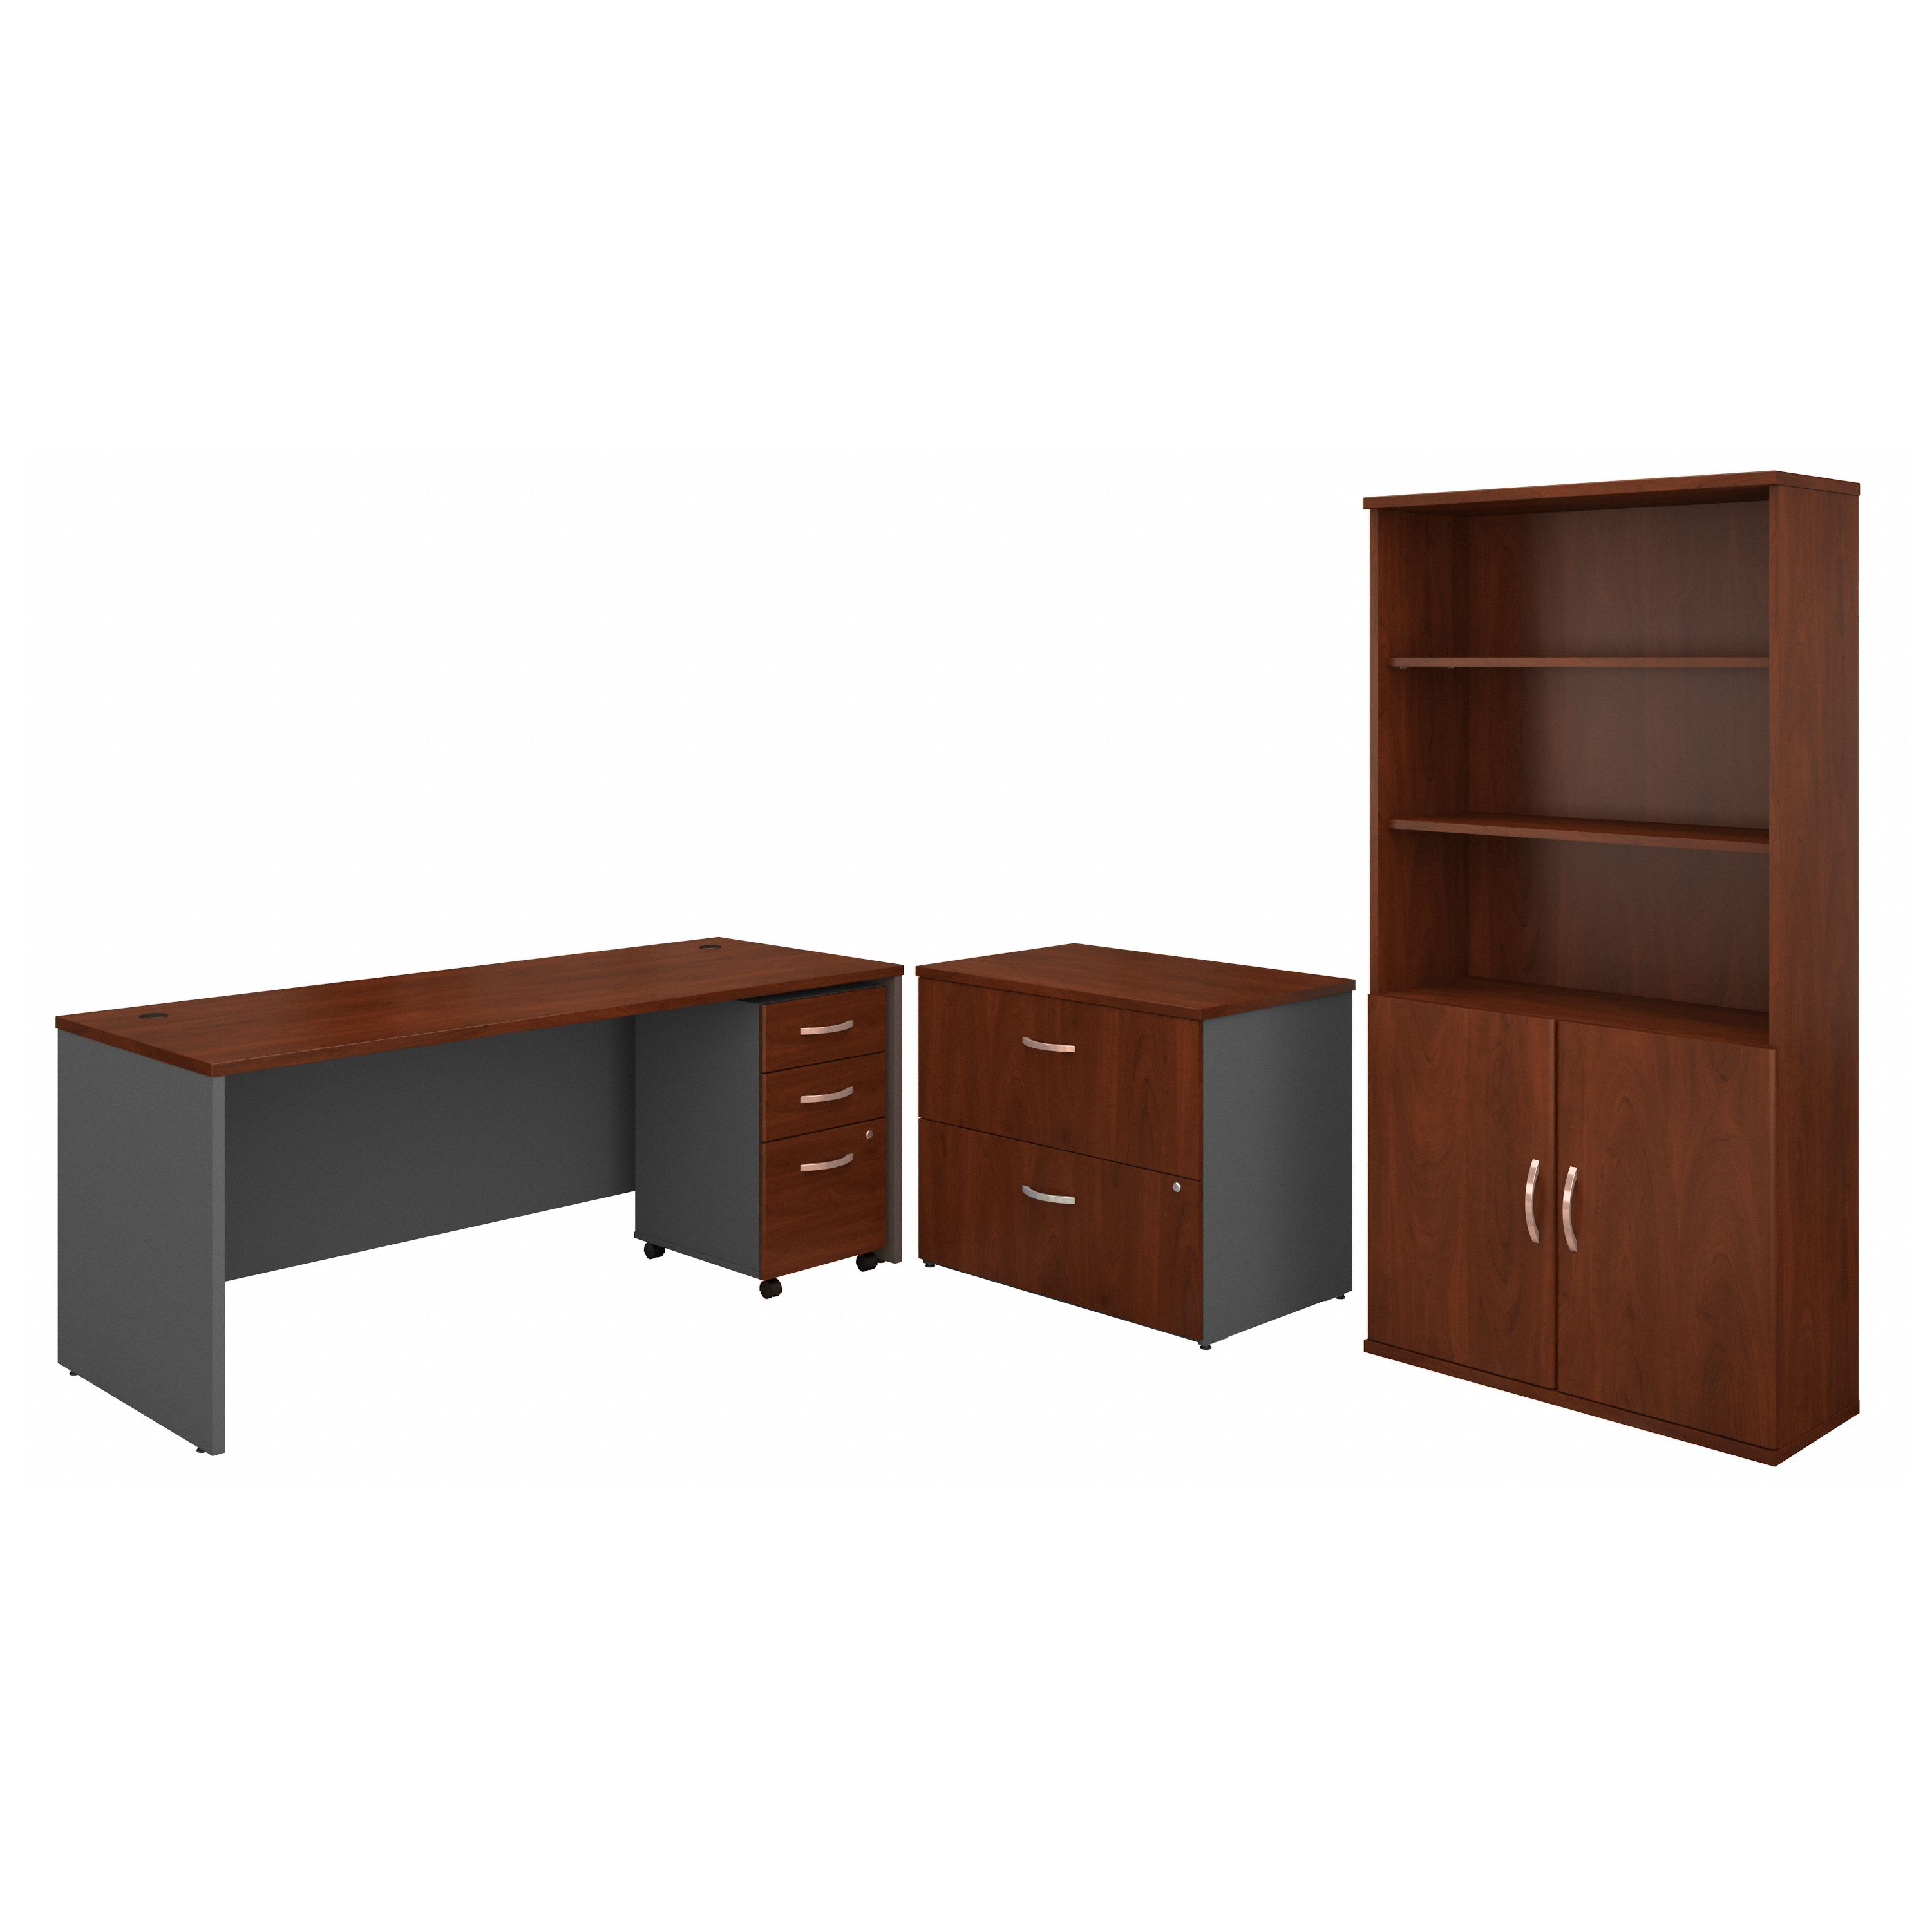 Shop Bush Business Furniture Series C 72W Office Desk with Bookcase and File Cabinets 02 SRC097HCSU #color_hansen cherry/graphite gray